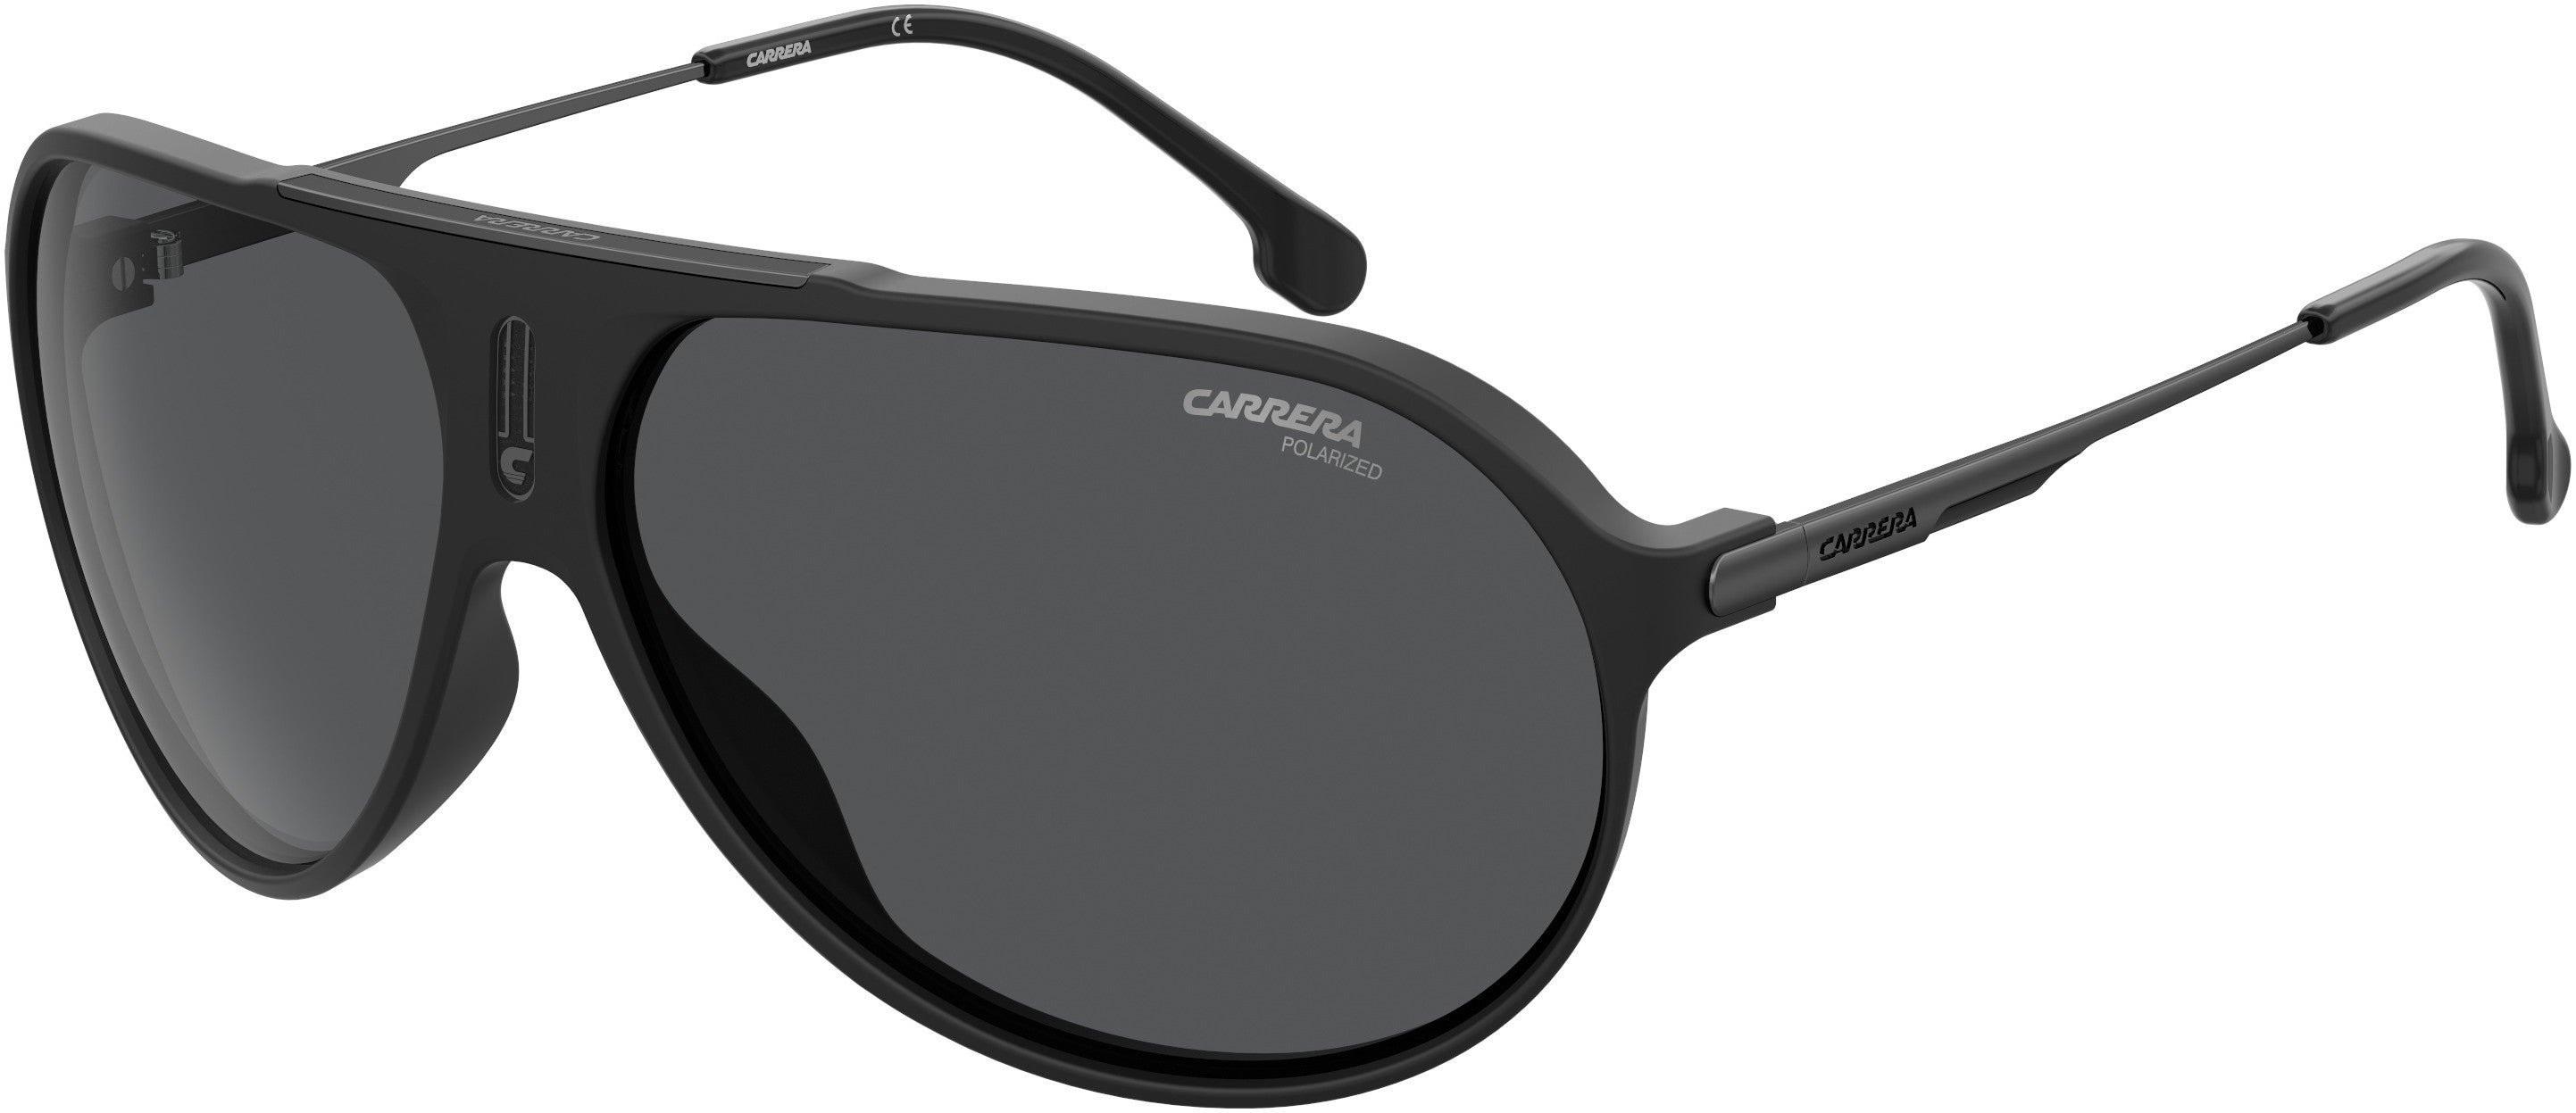 Carrera Hot 65 Aviator Sunglasses 0003-0003  Matte Black (M9 Gray Pz)